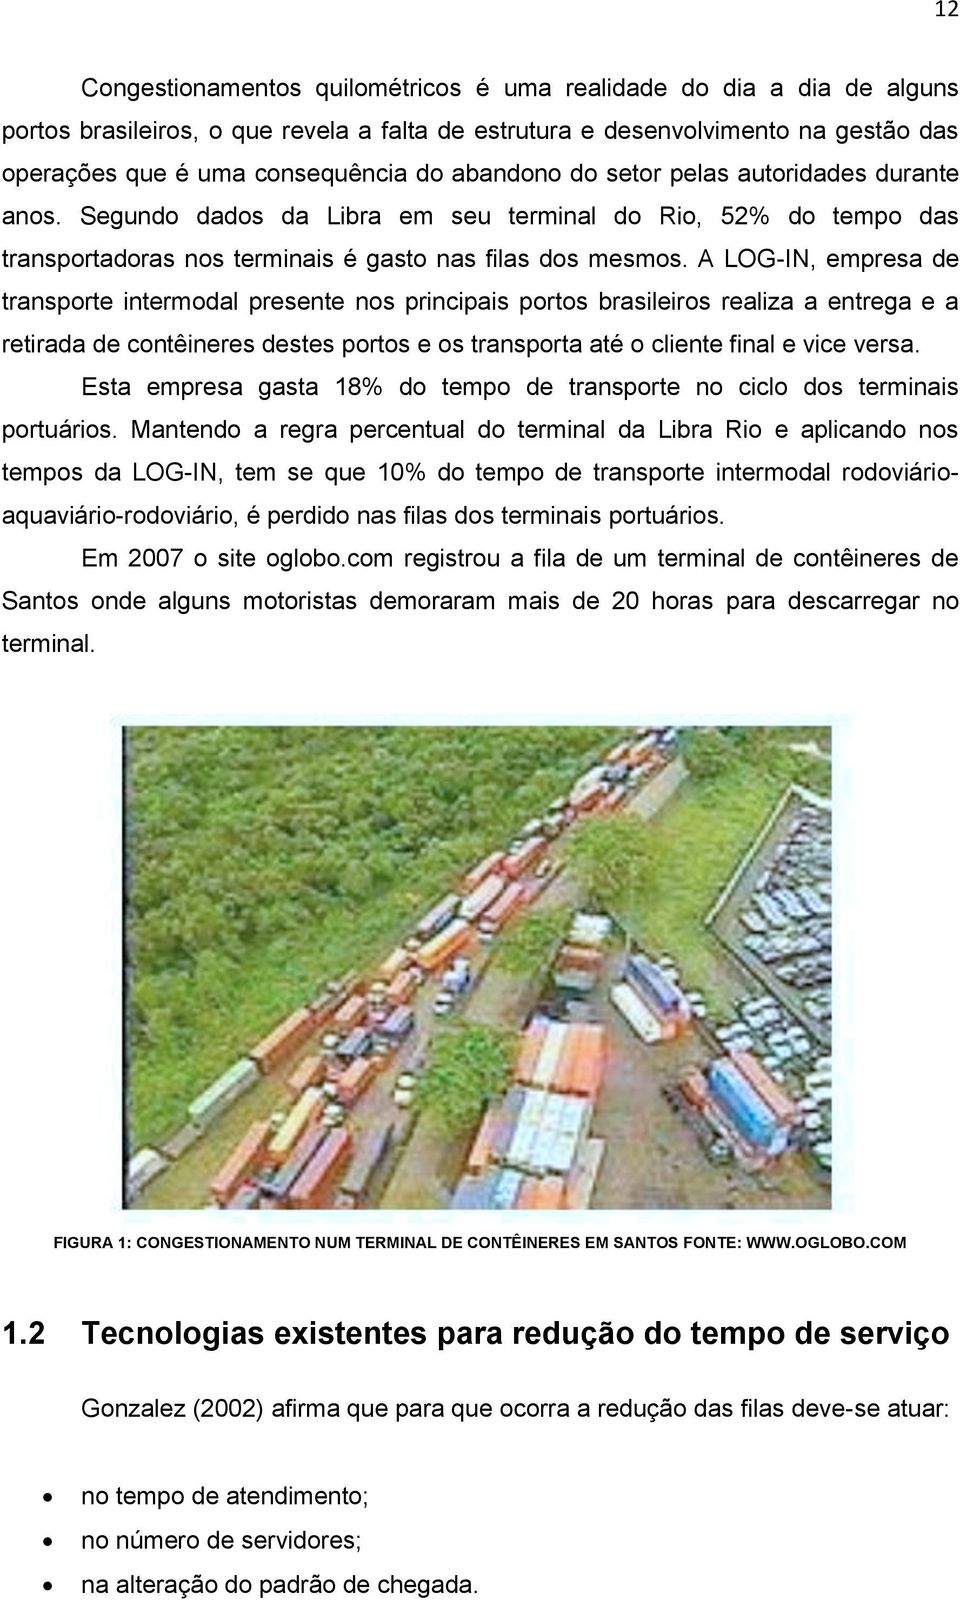 A LOG-IN, empresa de transporte intermodal presente nos principais portos brasileiros realiza a entrega e a retirada de contêineres destes portos e os transporta até o cliente final e vice versa.